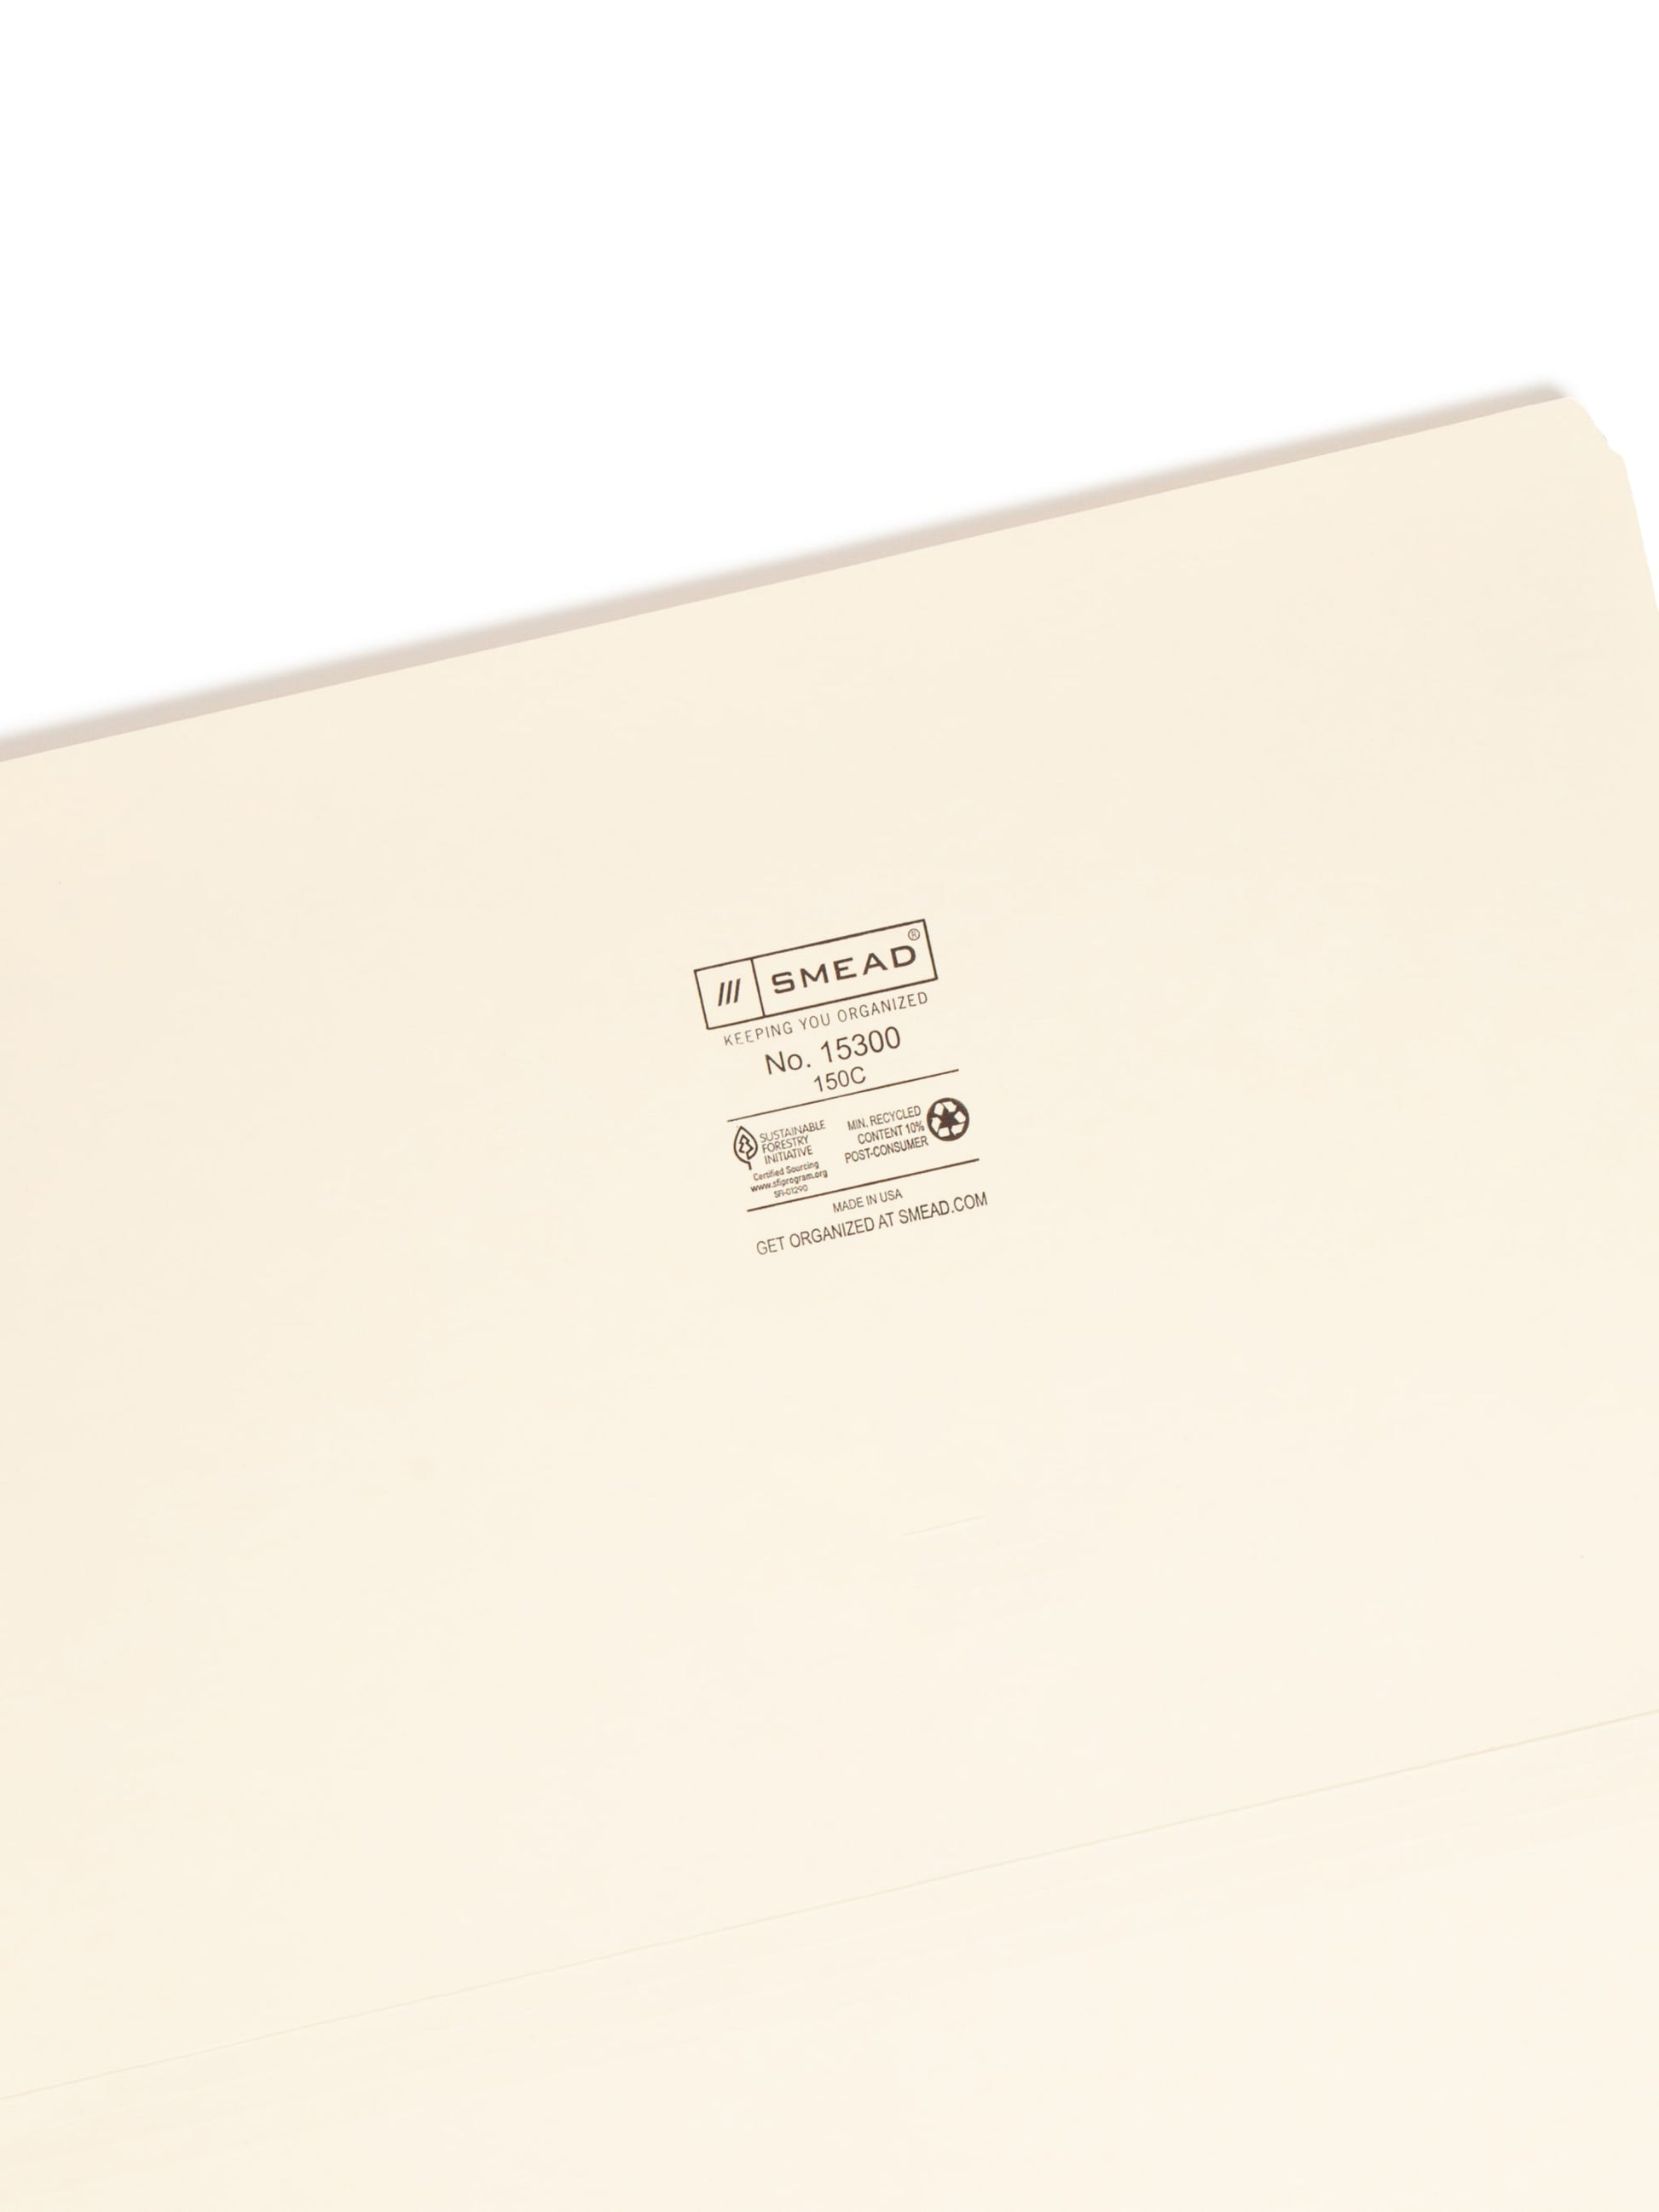 Standard File Folders, Straight-Cut Tab, Manila Color, Legal Size, Set of 100, 086486153003